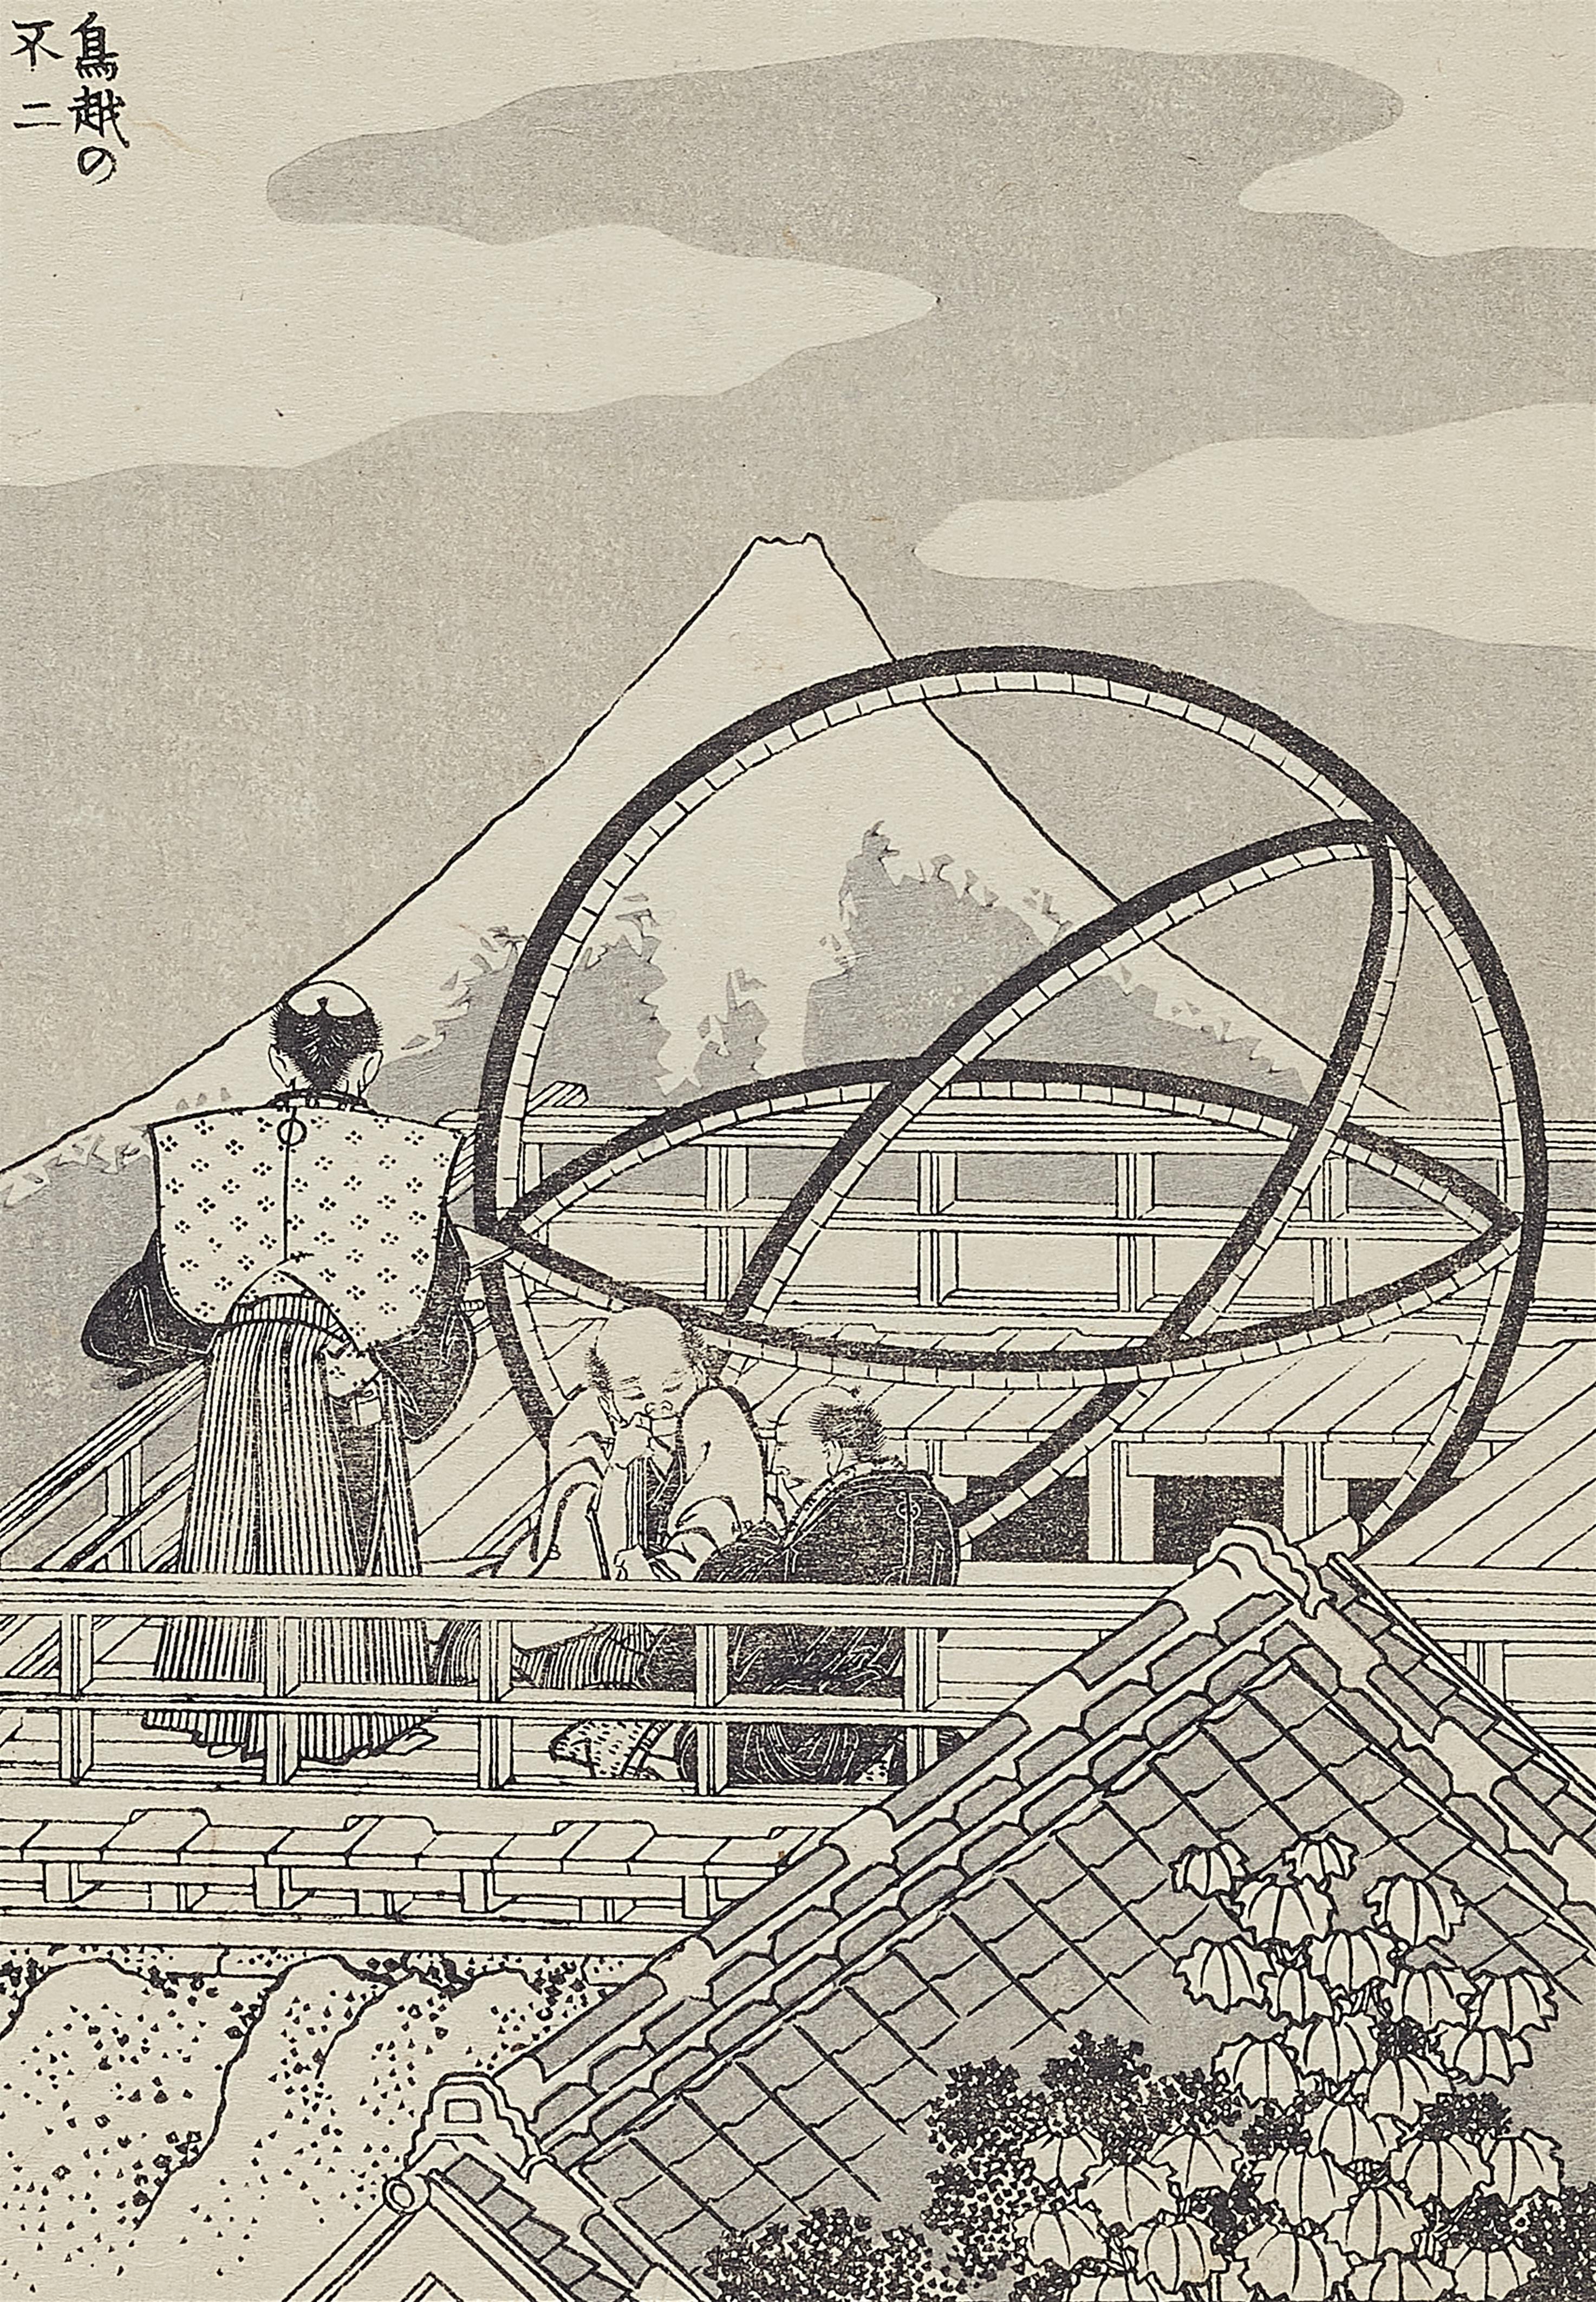 Katsushika Hokusai - Black and white illustrations from the album Fugaku hyakkei - image-33